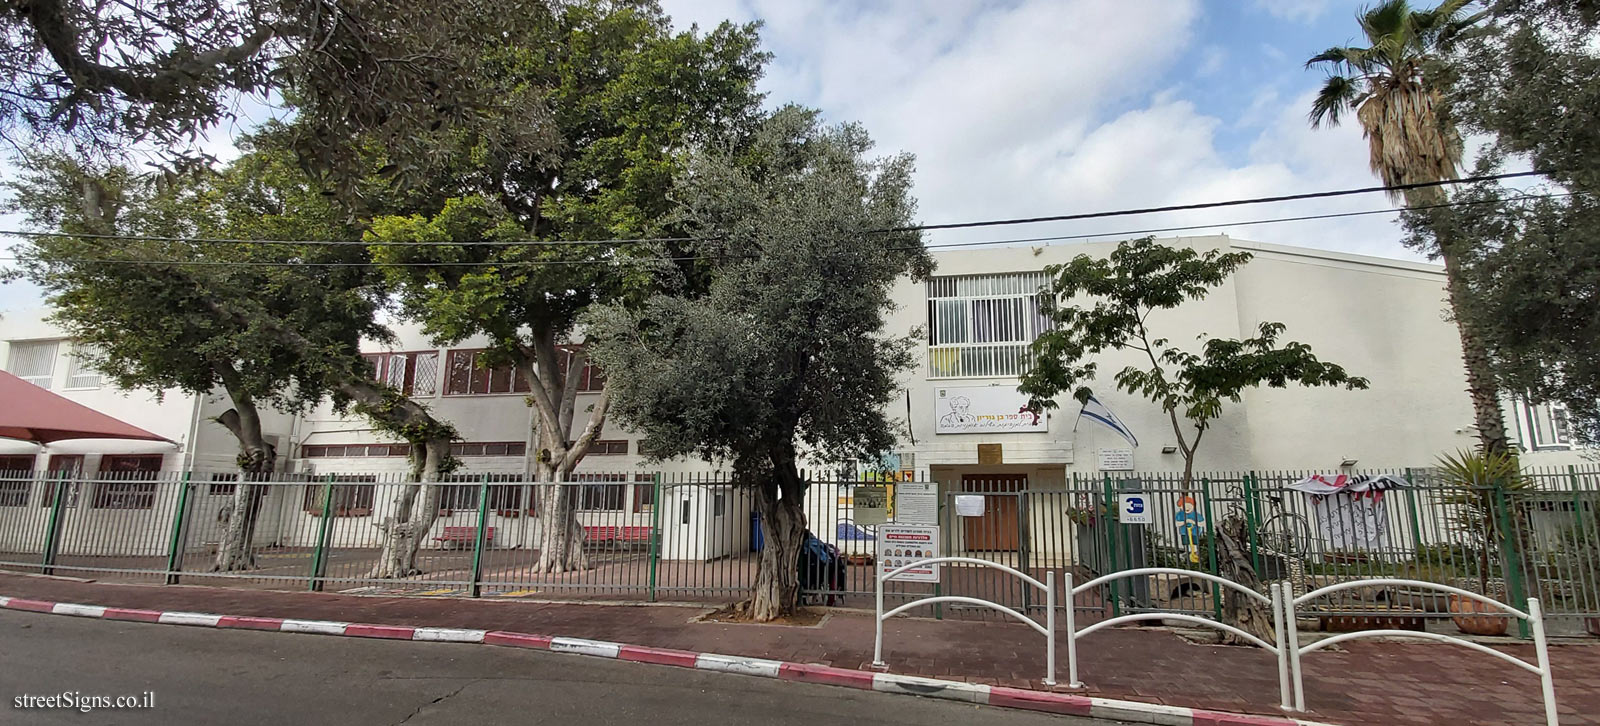 Ramat Gan - "Hachlama" Convalescent Home (Ben-Gurion school) - Moshe Sharet St 27, Ramat Gan, Israel